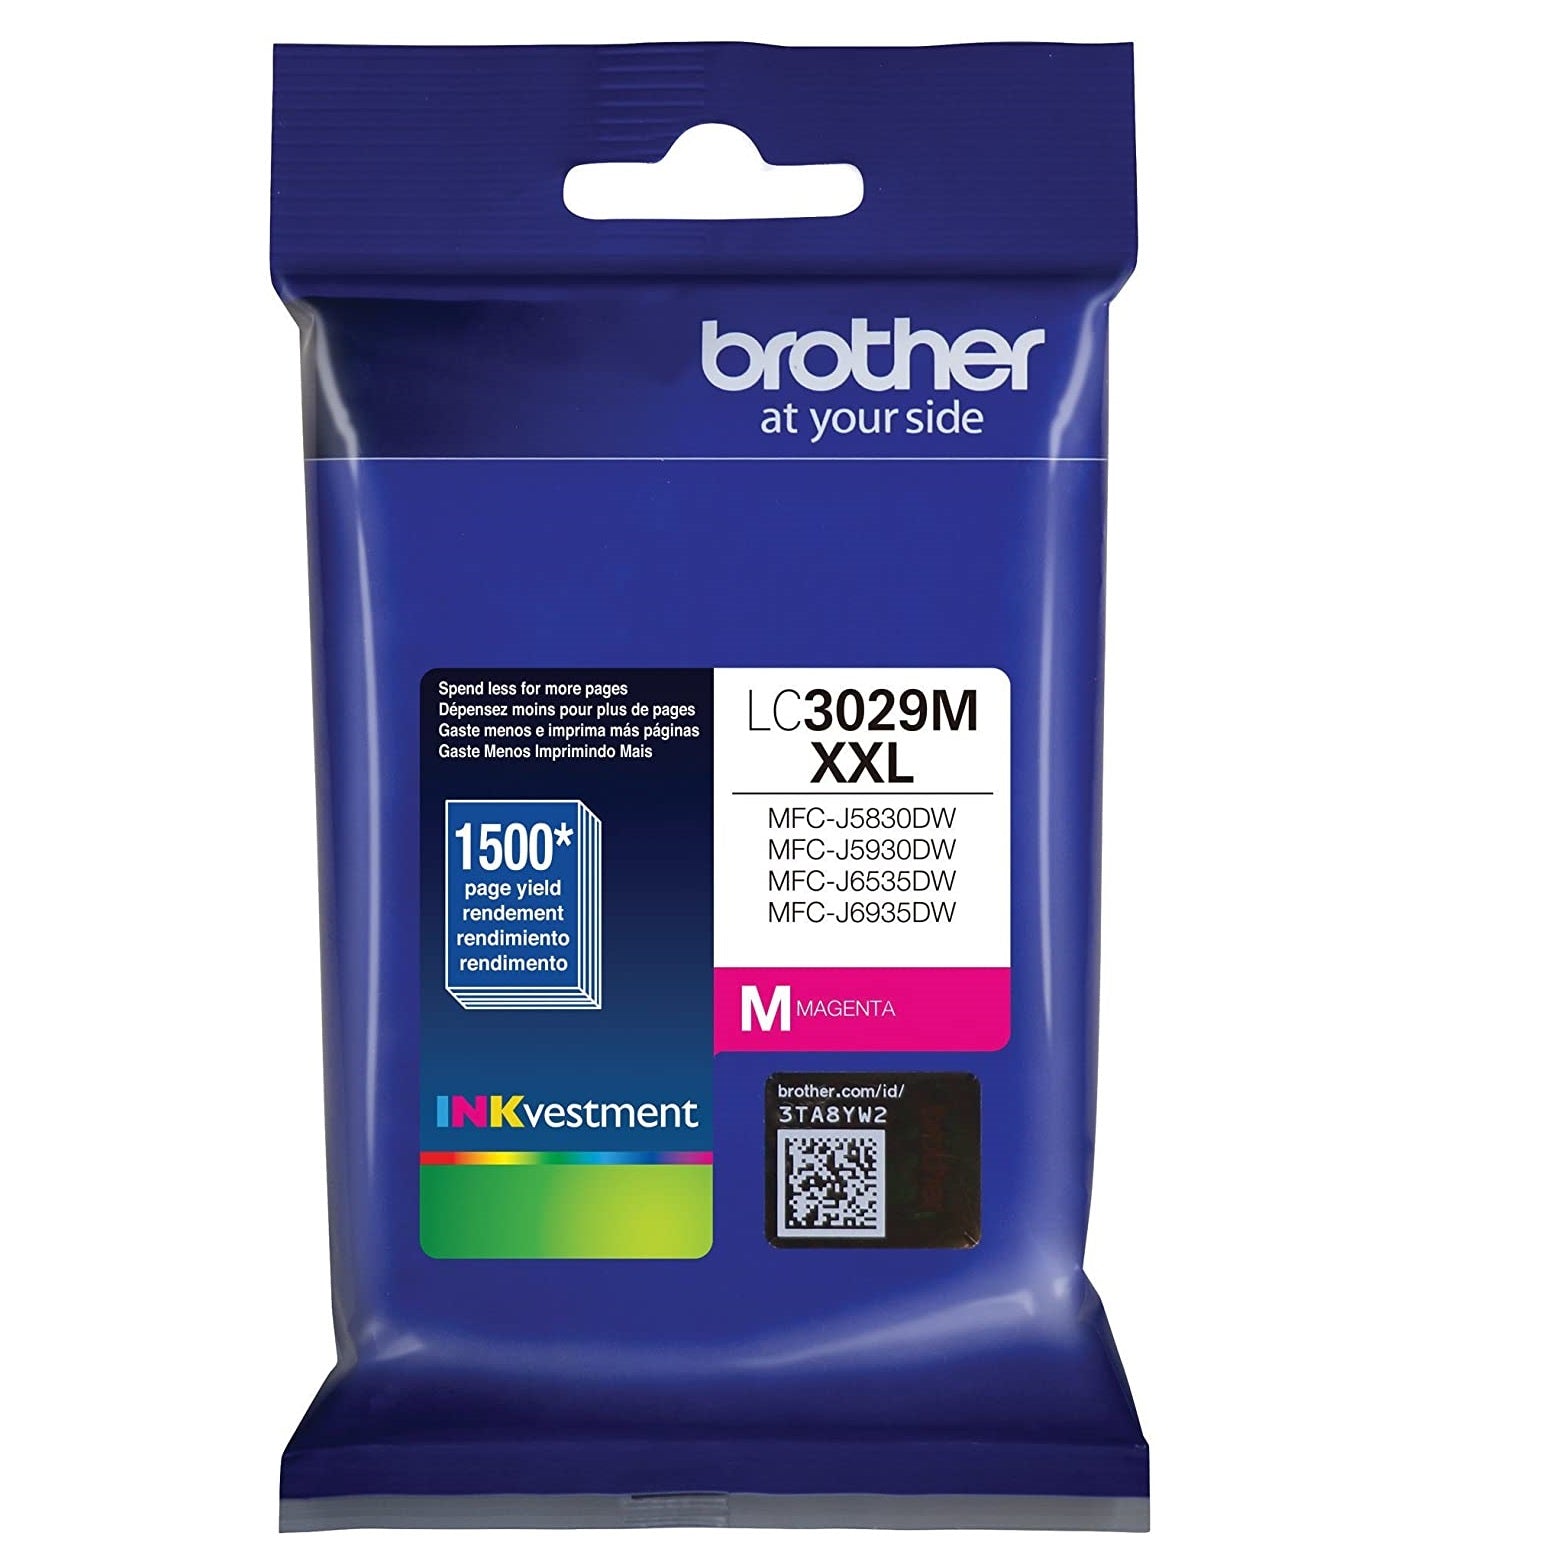 Absolute Toner Brother LC3029M Super High Yield Magenta Genuine OEM Ink Cartridge Original Brother Cartridges